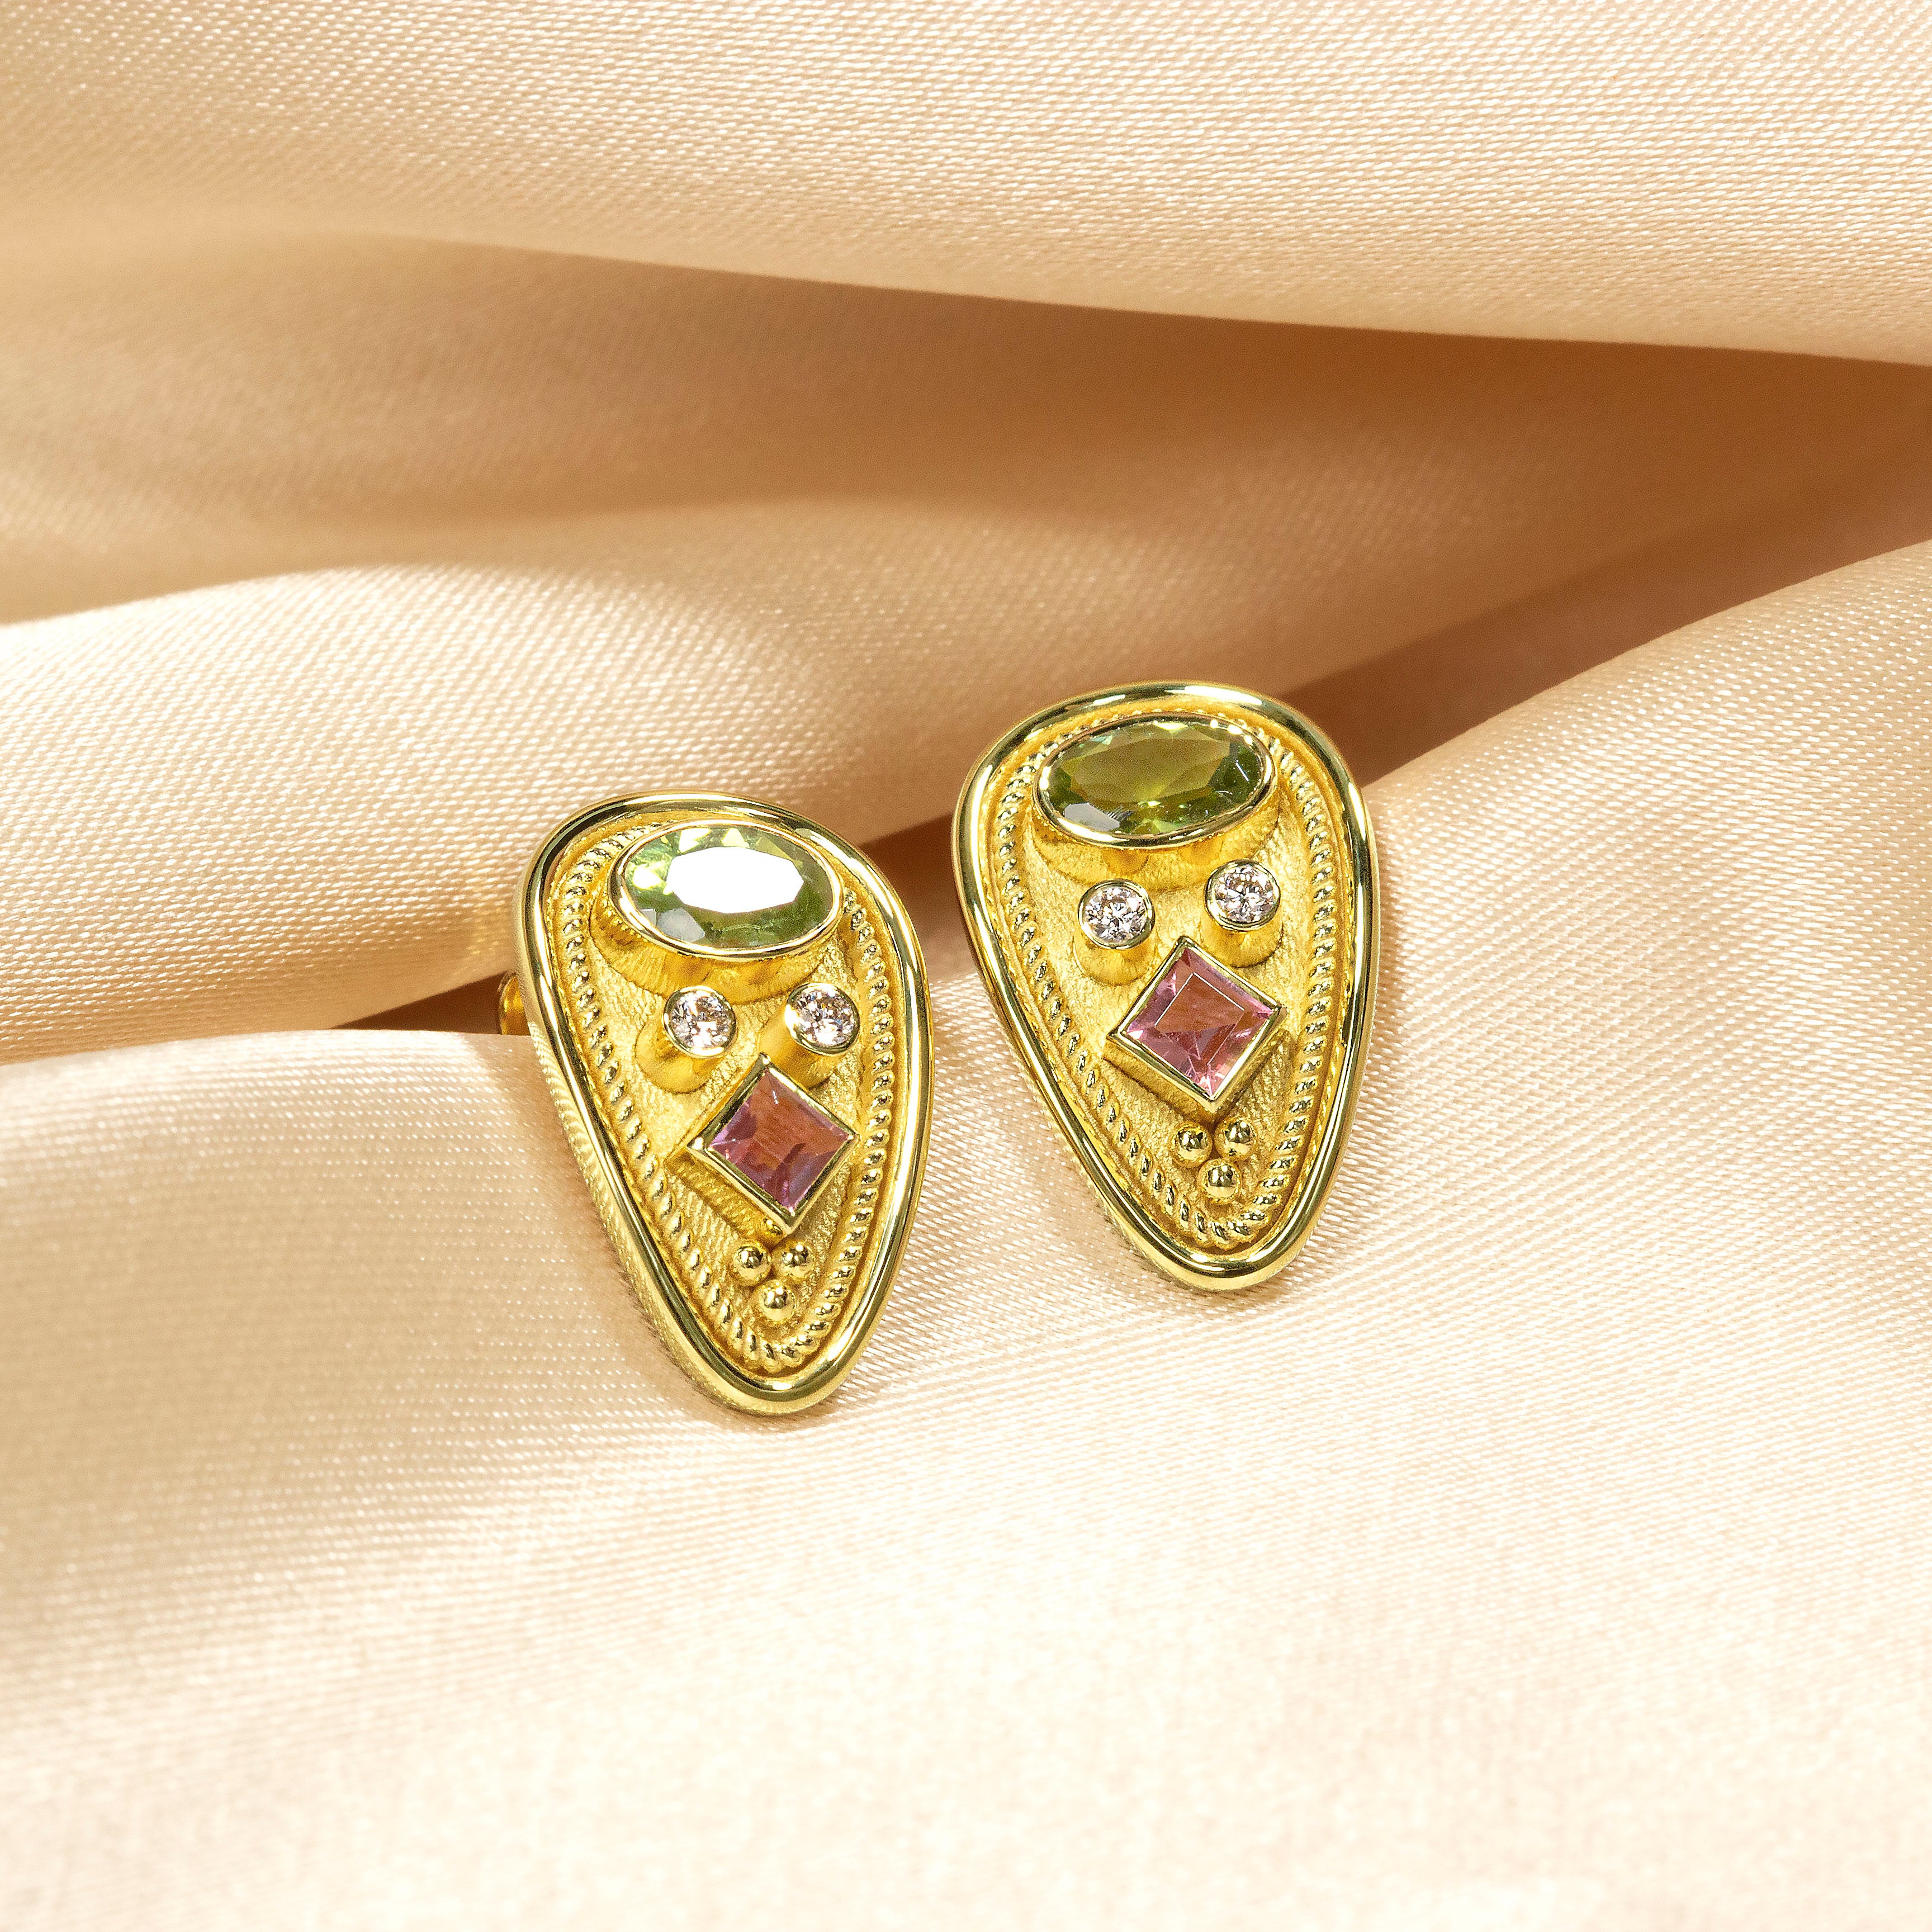 Byzantine Gold Earrings with Tourmalines and Diamonds Odysseus Jewelry